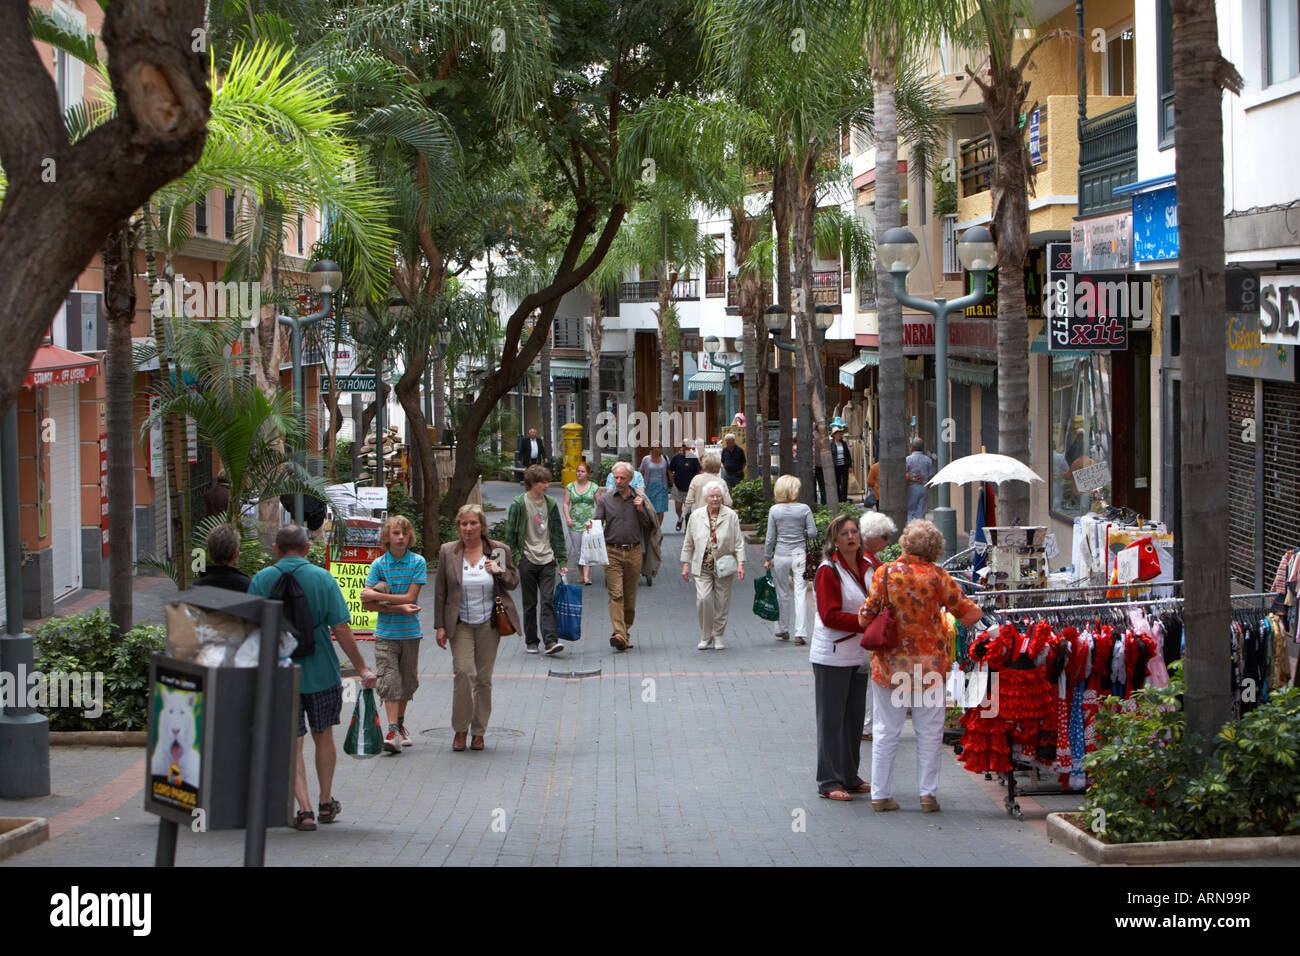 Tenerife shopping -Fotos und -Bildmaterial in hoher Auflösung – Alamy